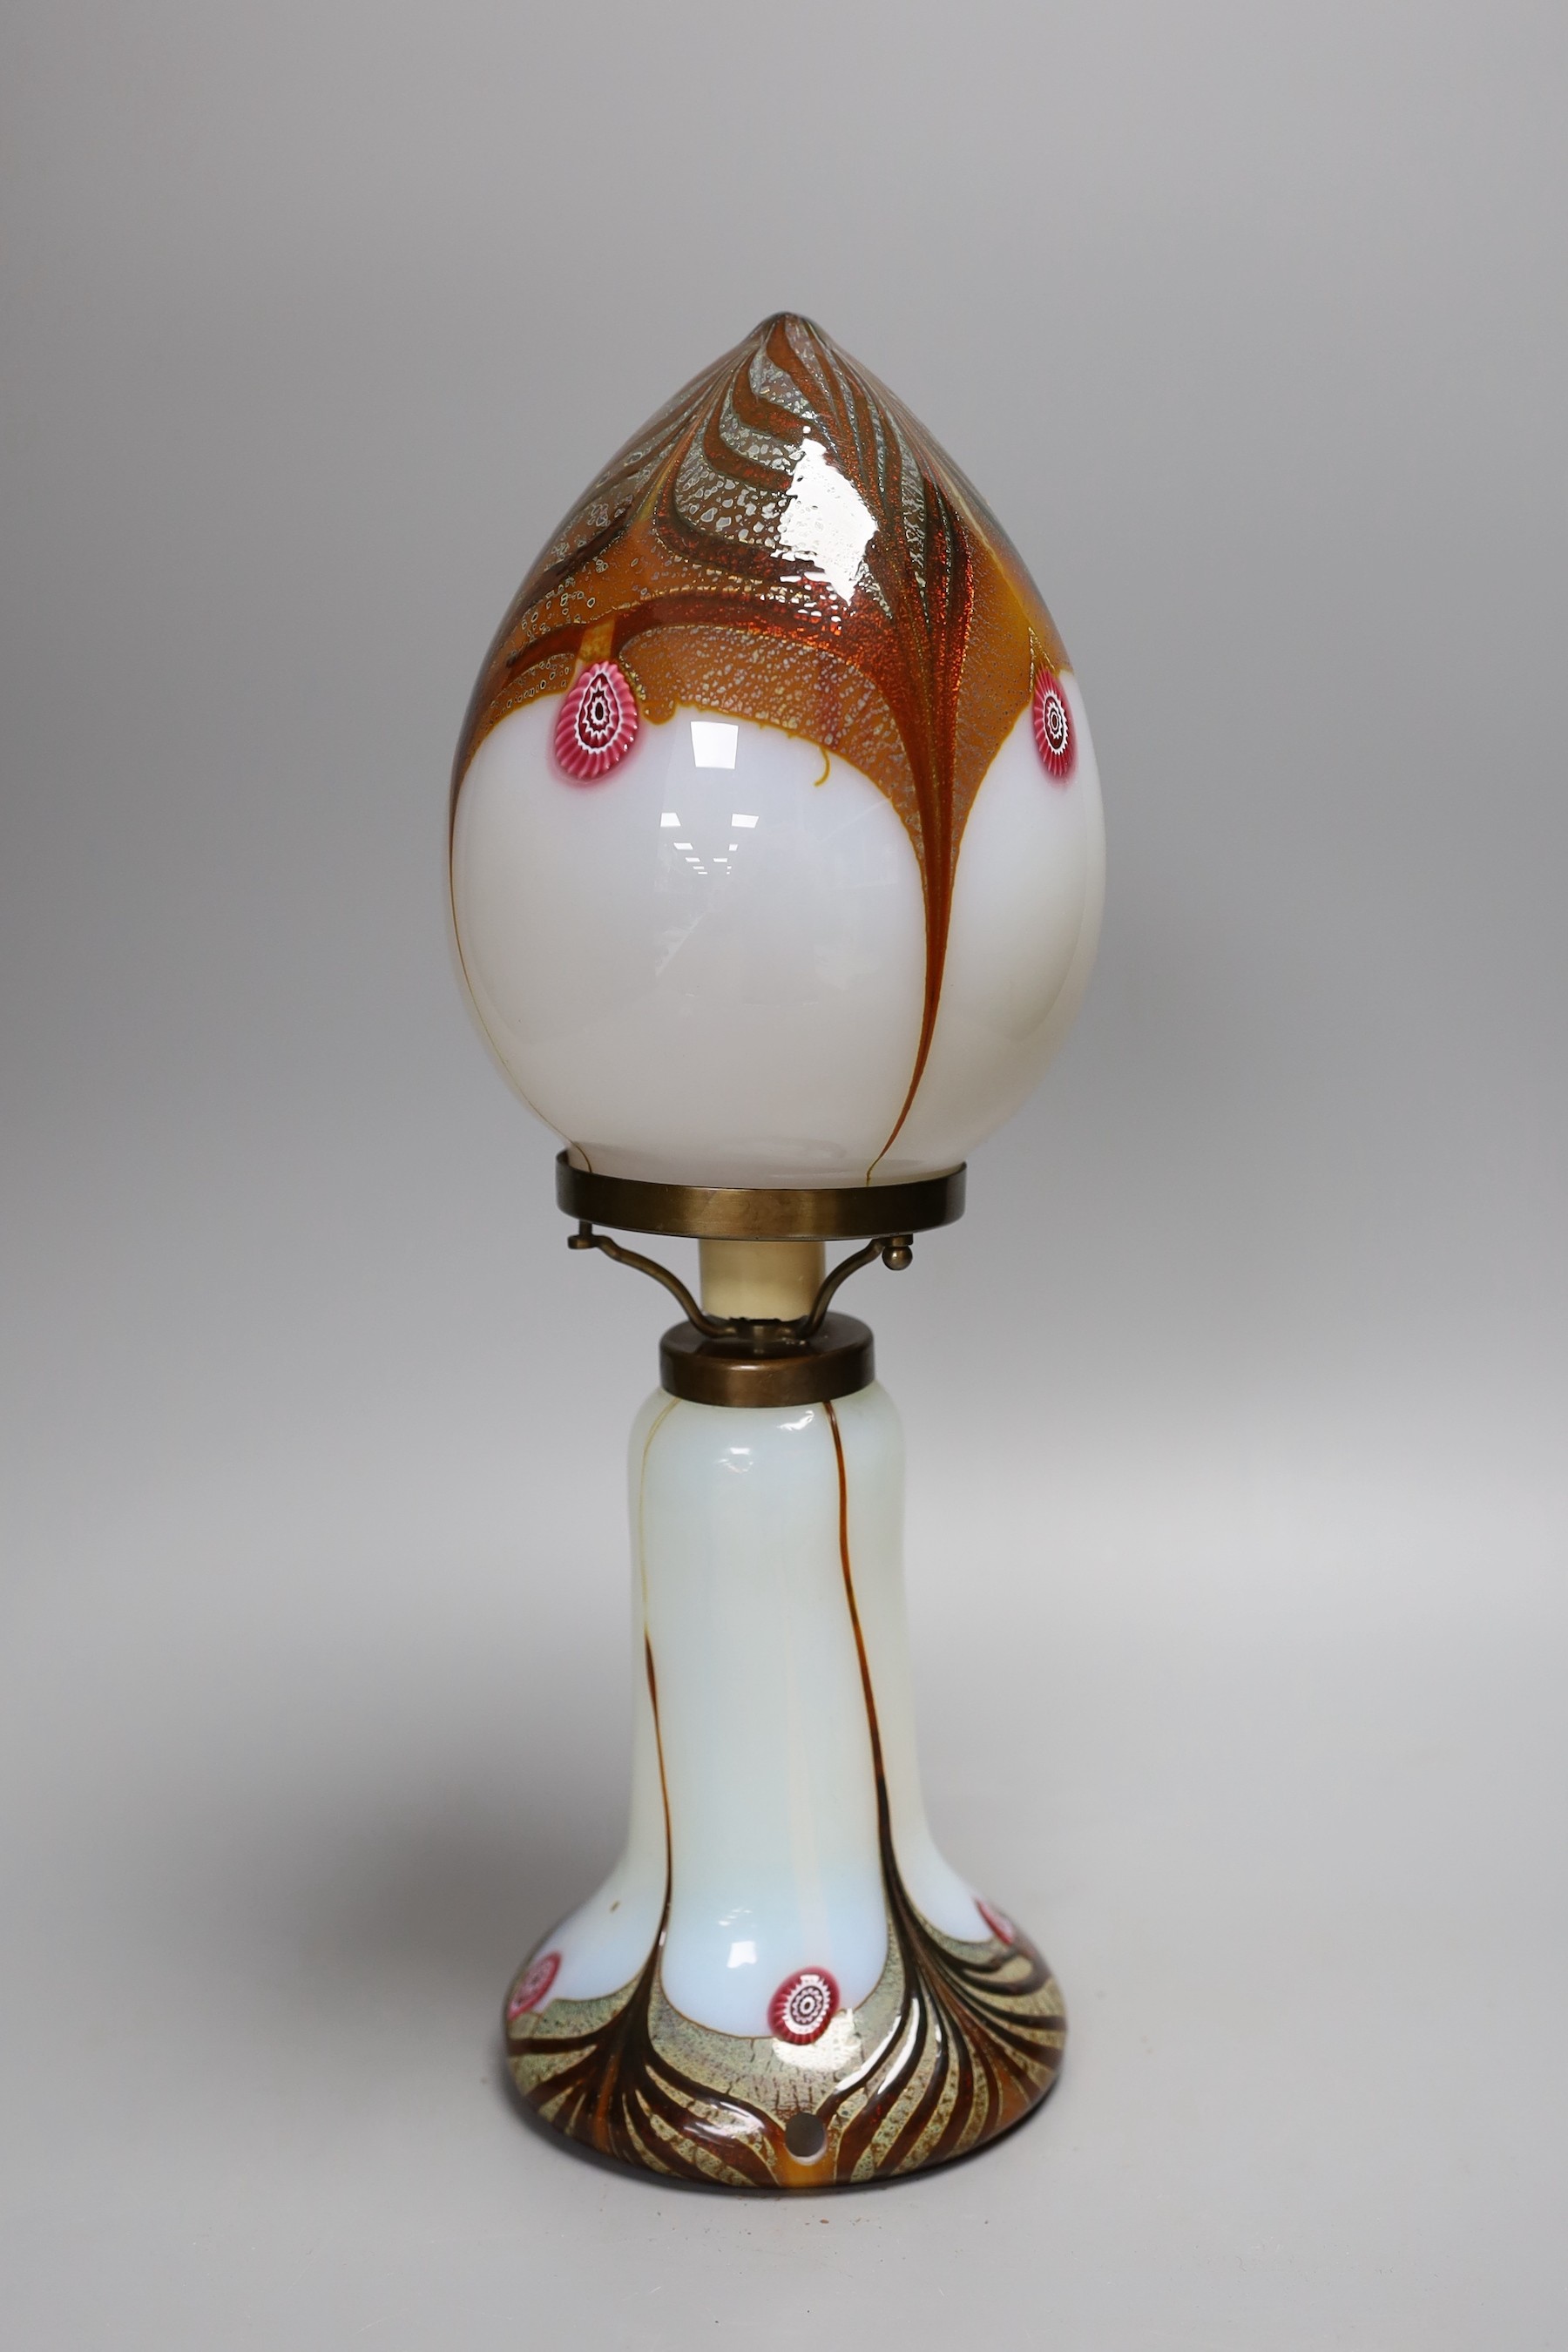 An Aldo Nason Murano glass lamp, 37cm tall